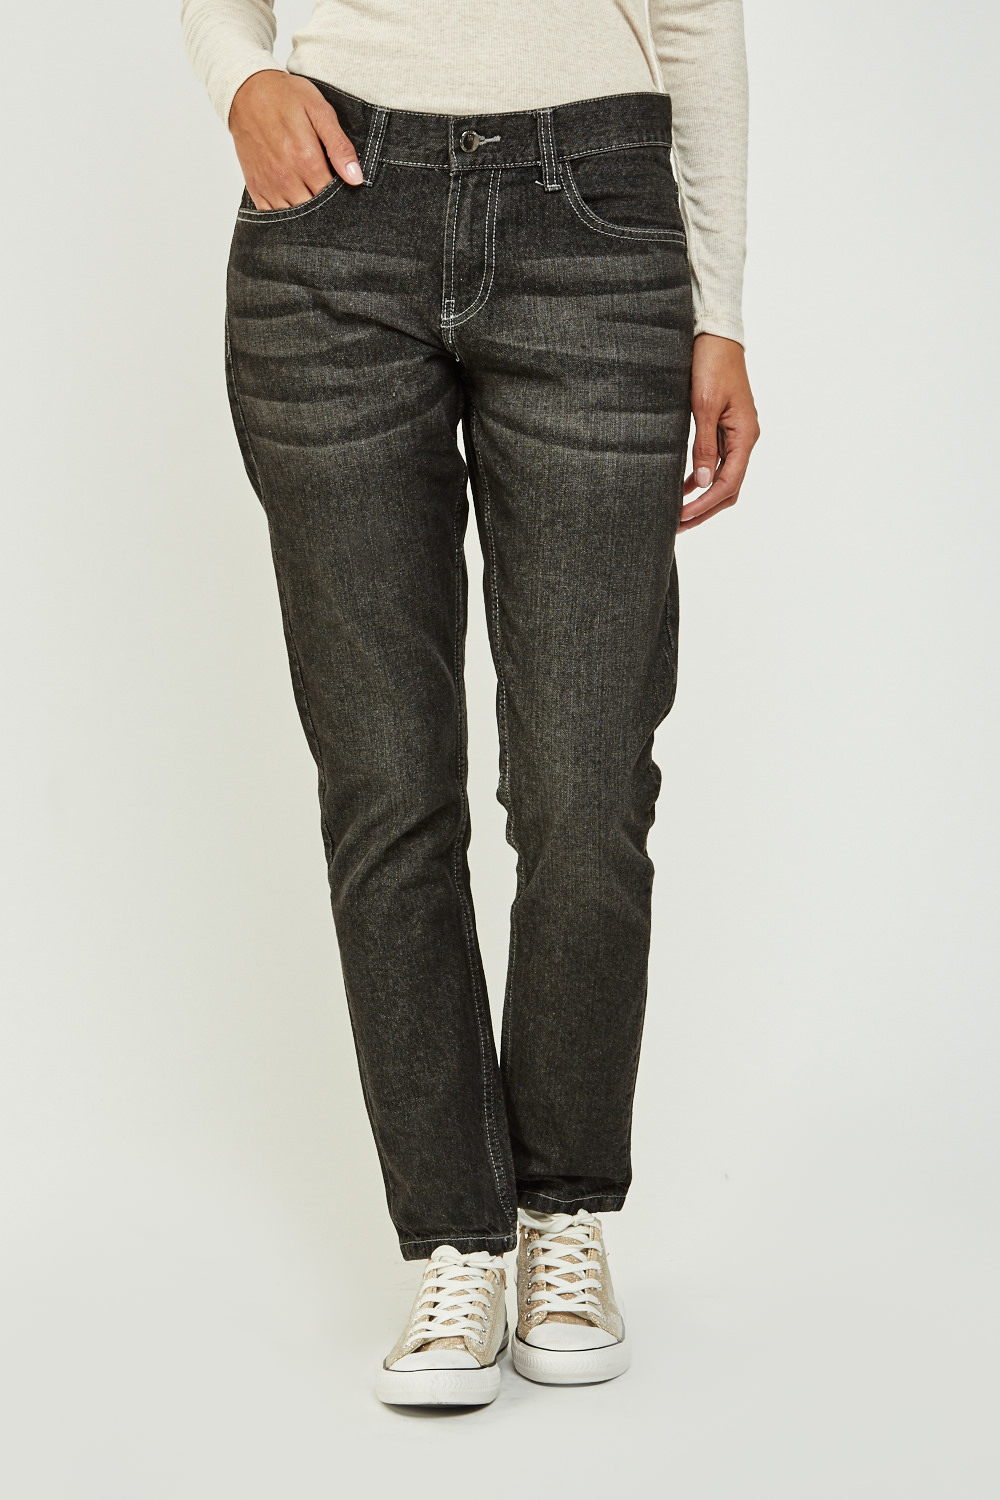 Straight Leg Denim Black Jeans - Just $7